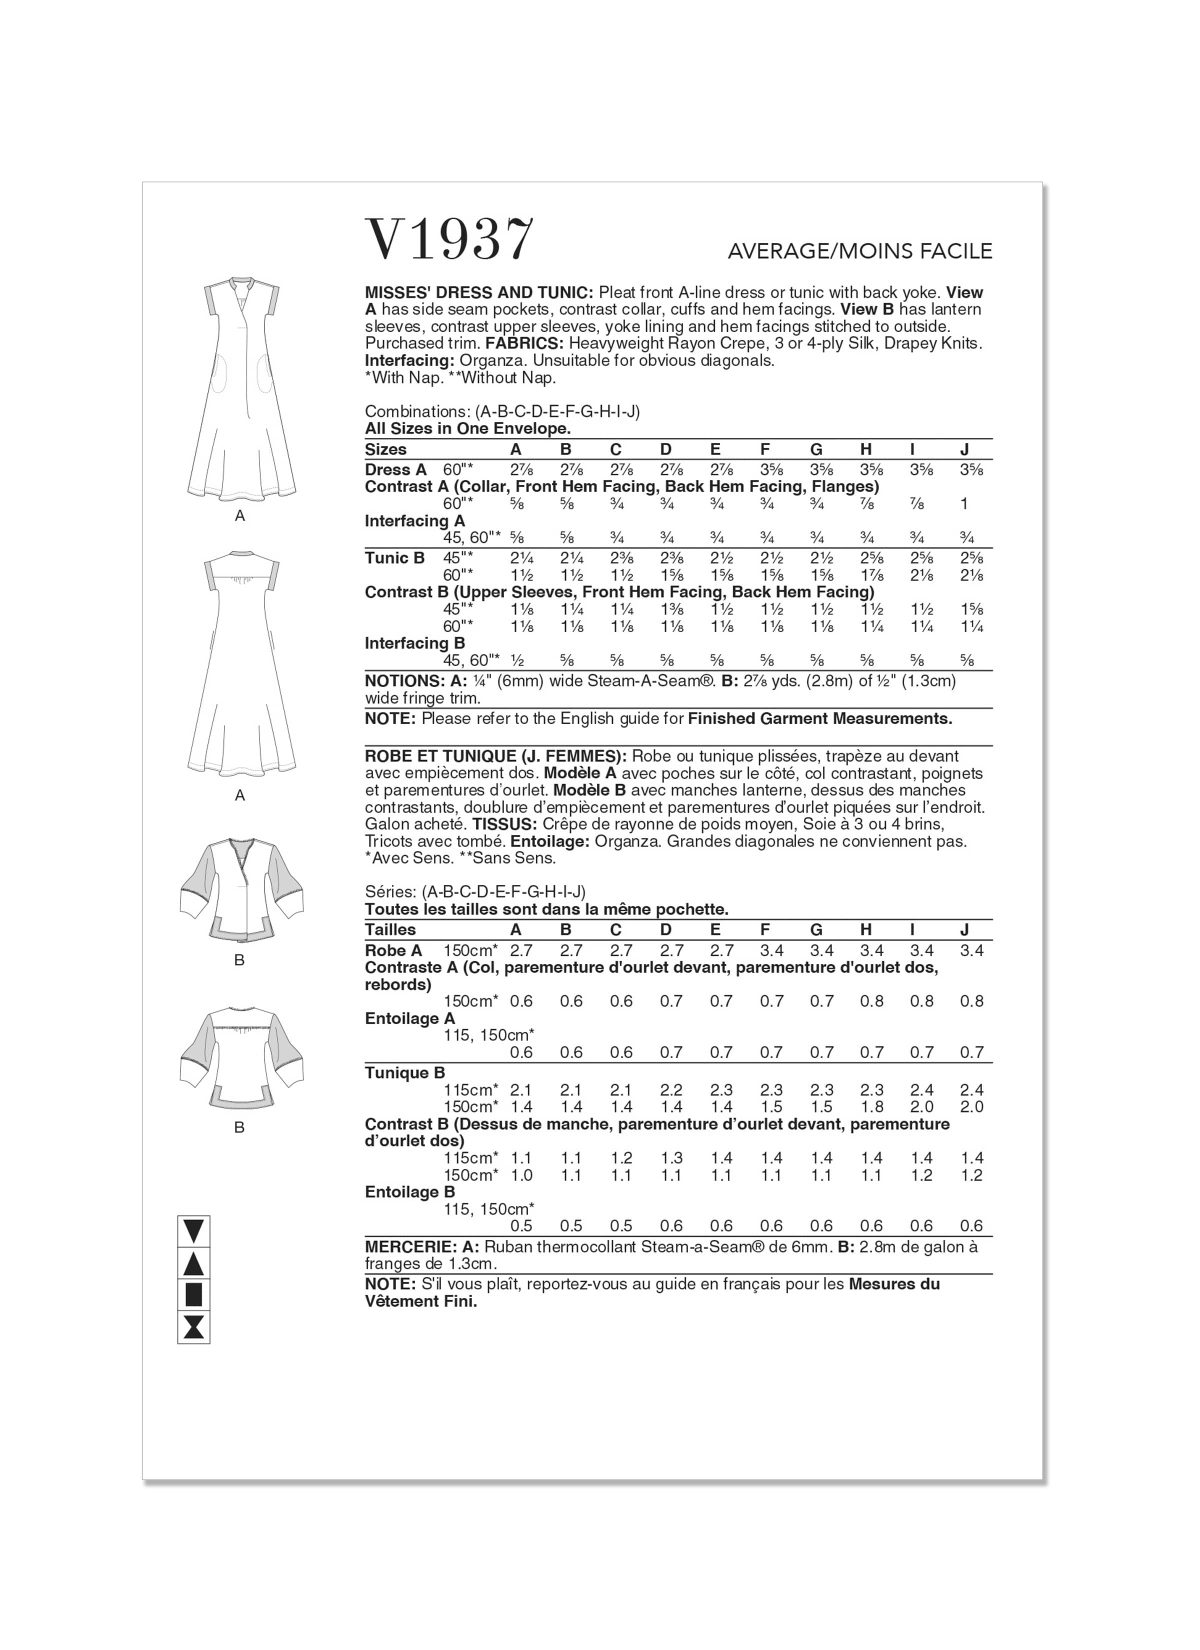 Vogue Patterns V1937 Misses' Dress and Tunic by Sandra Betzina